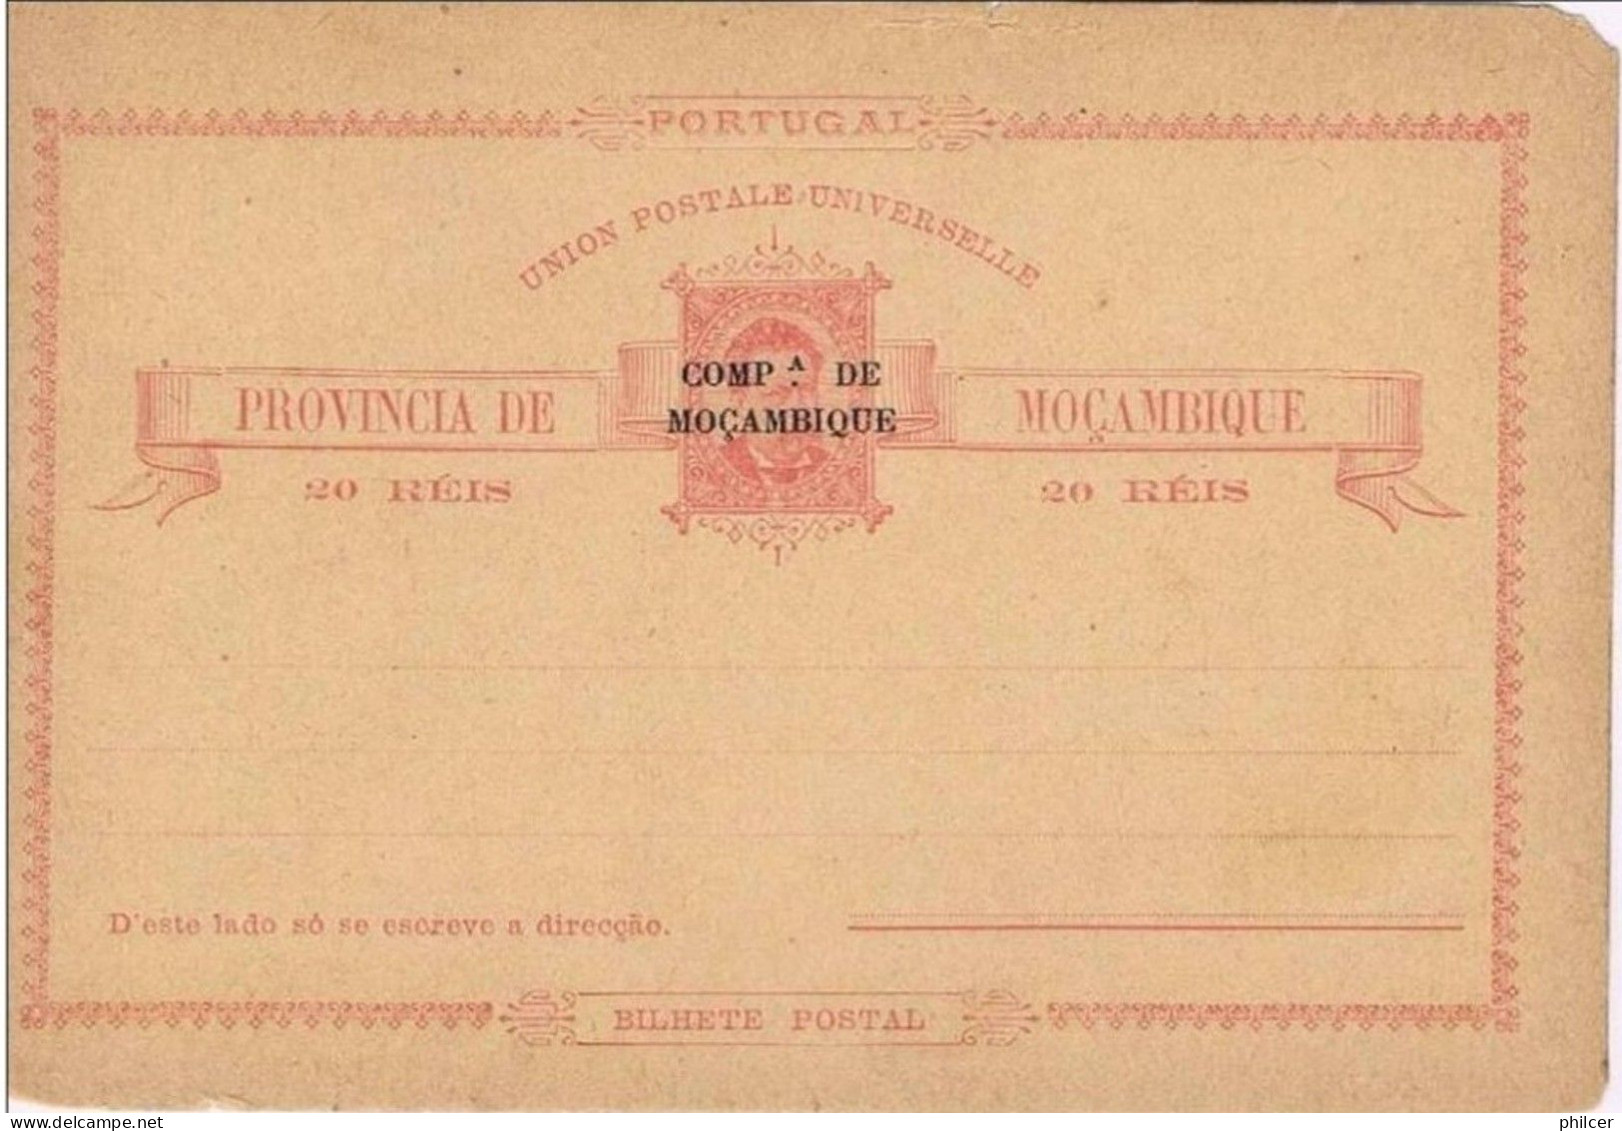 Companhia De Moçambique, Bilhete Postal 20 Reis - Mozambique